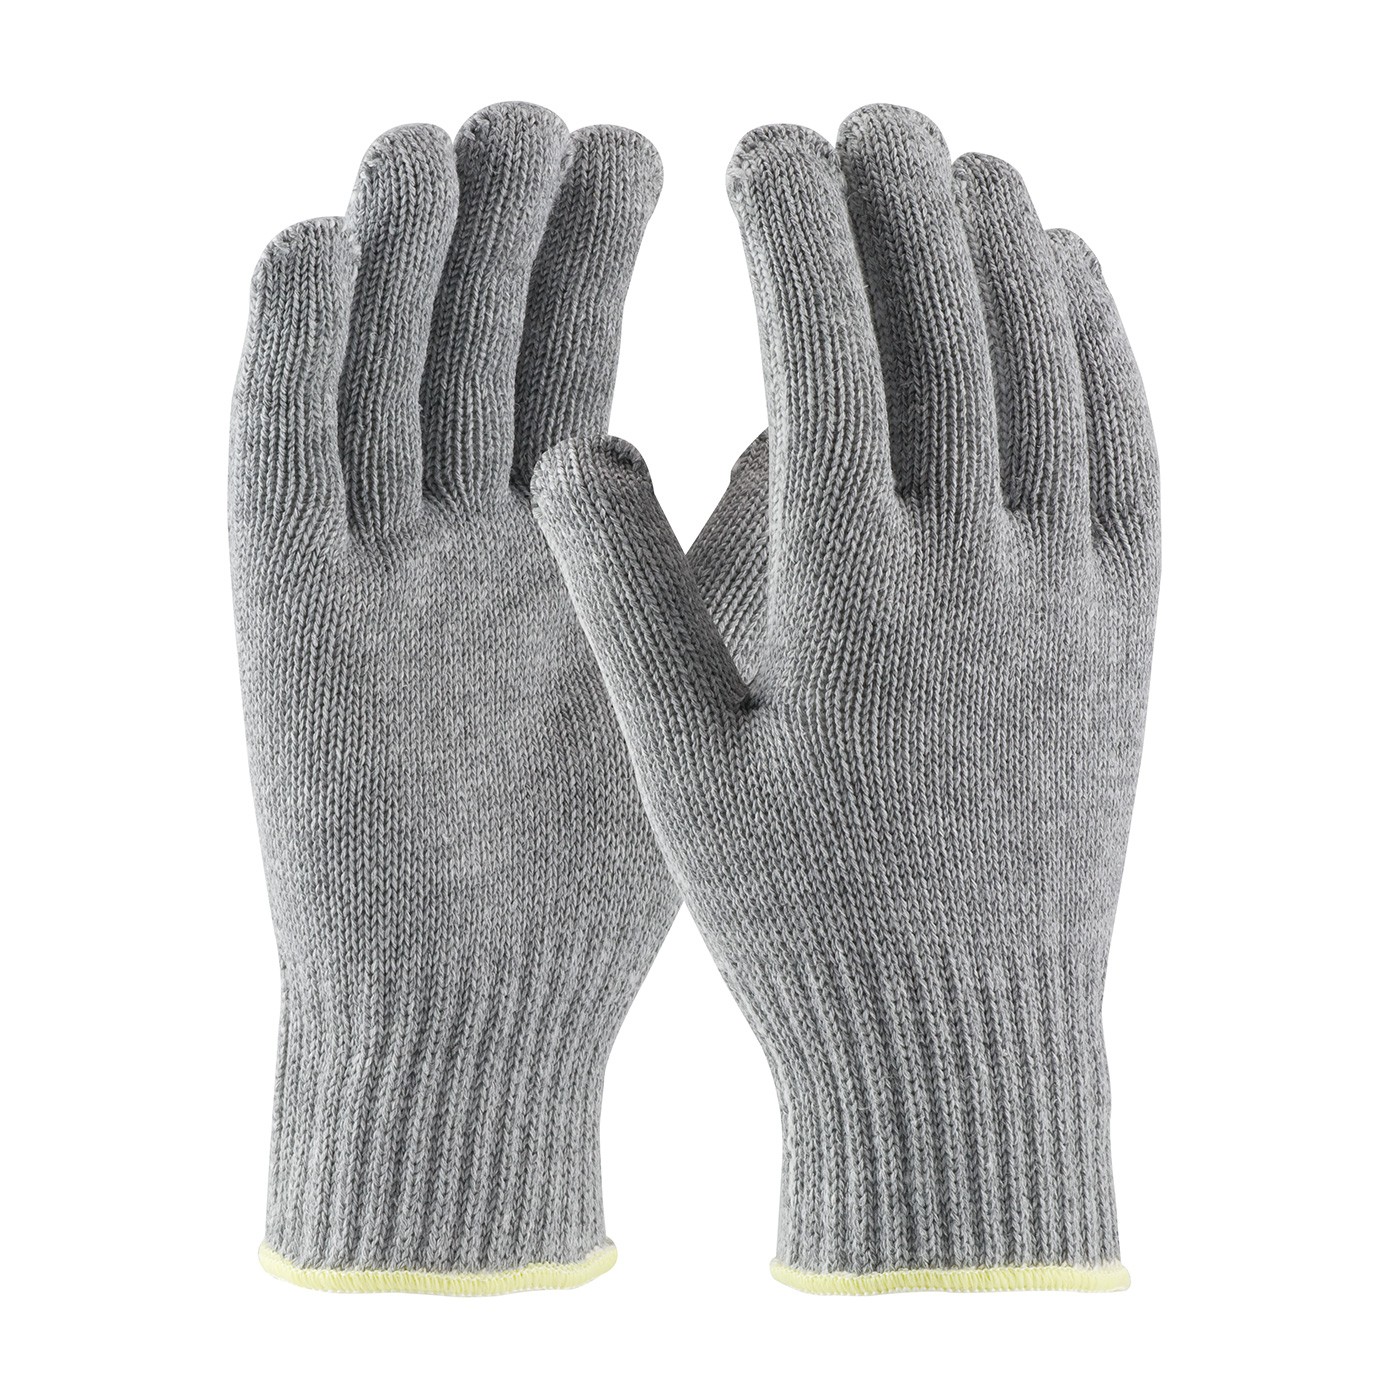 Kut Gard® Seamless Knit ACP / Dyneema® Blended Glove with Polyester Lining - Medium Weight  (#17-DA700)